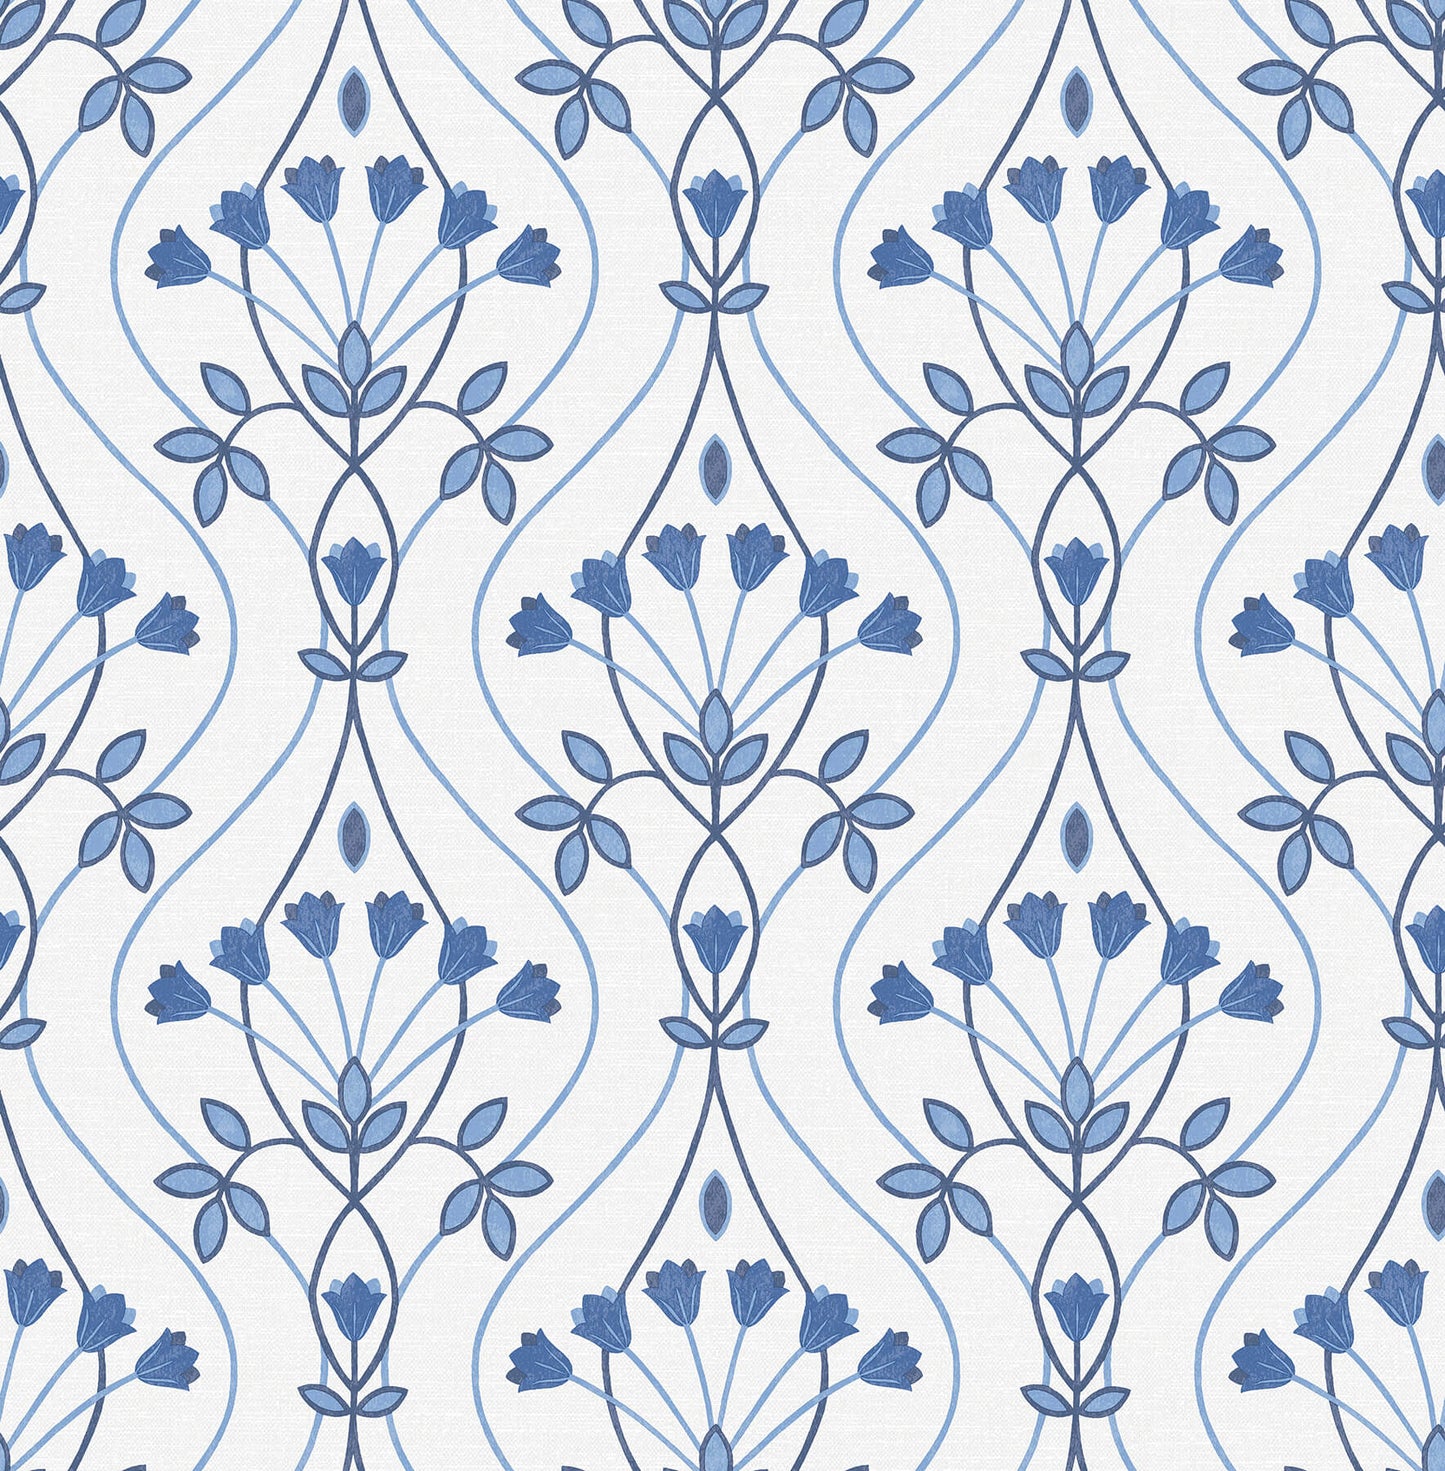 A-Street Prints Revival Dard Tulip Ogee Wallpaper - Blue